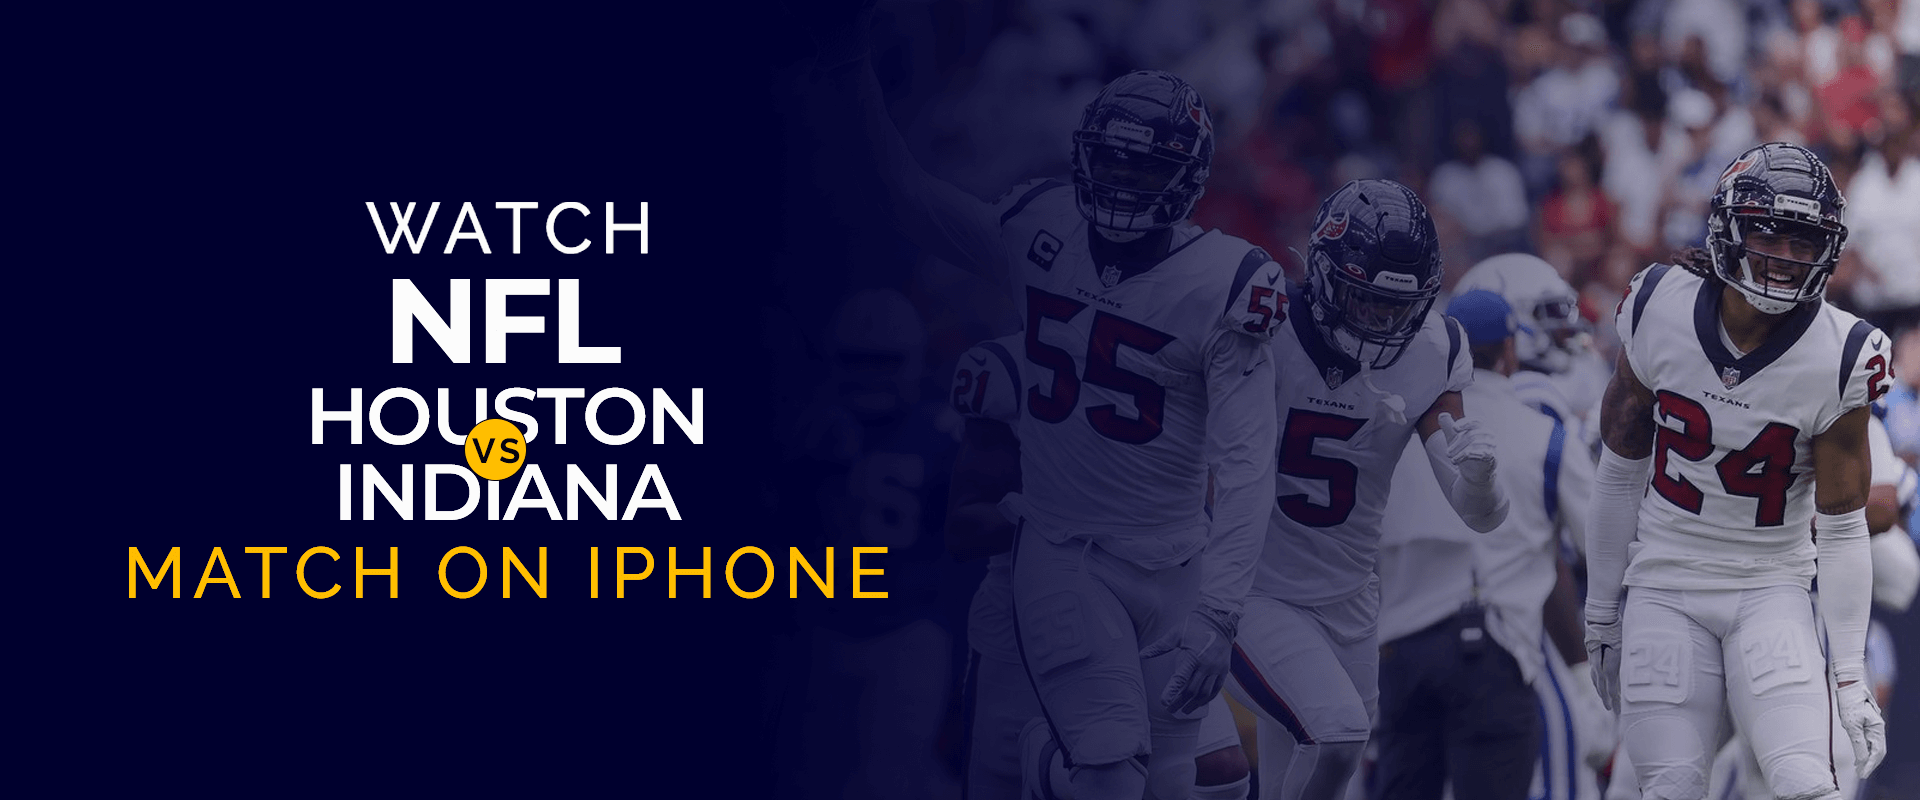 Guarda la partita NFL Houston vs Indiana su iPhone